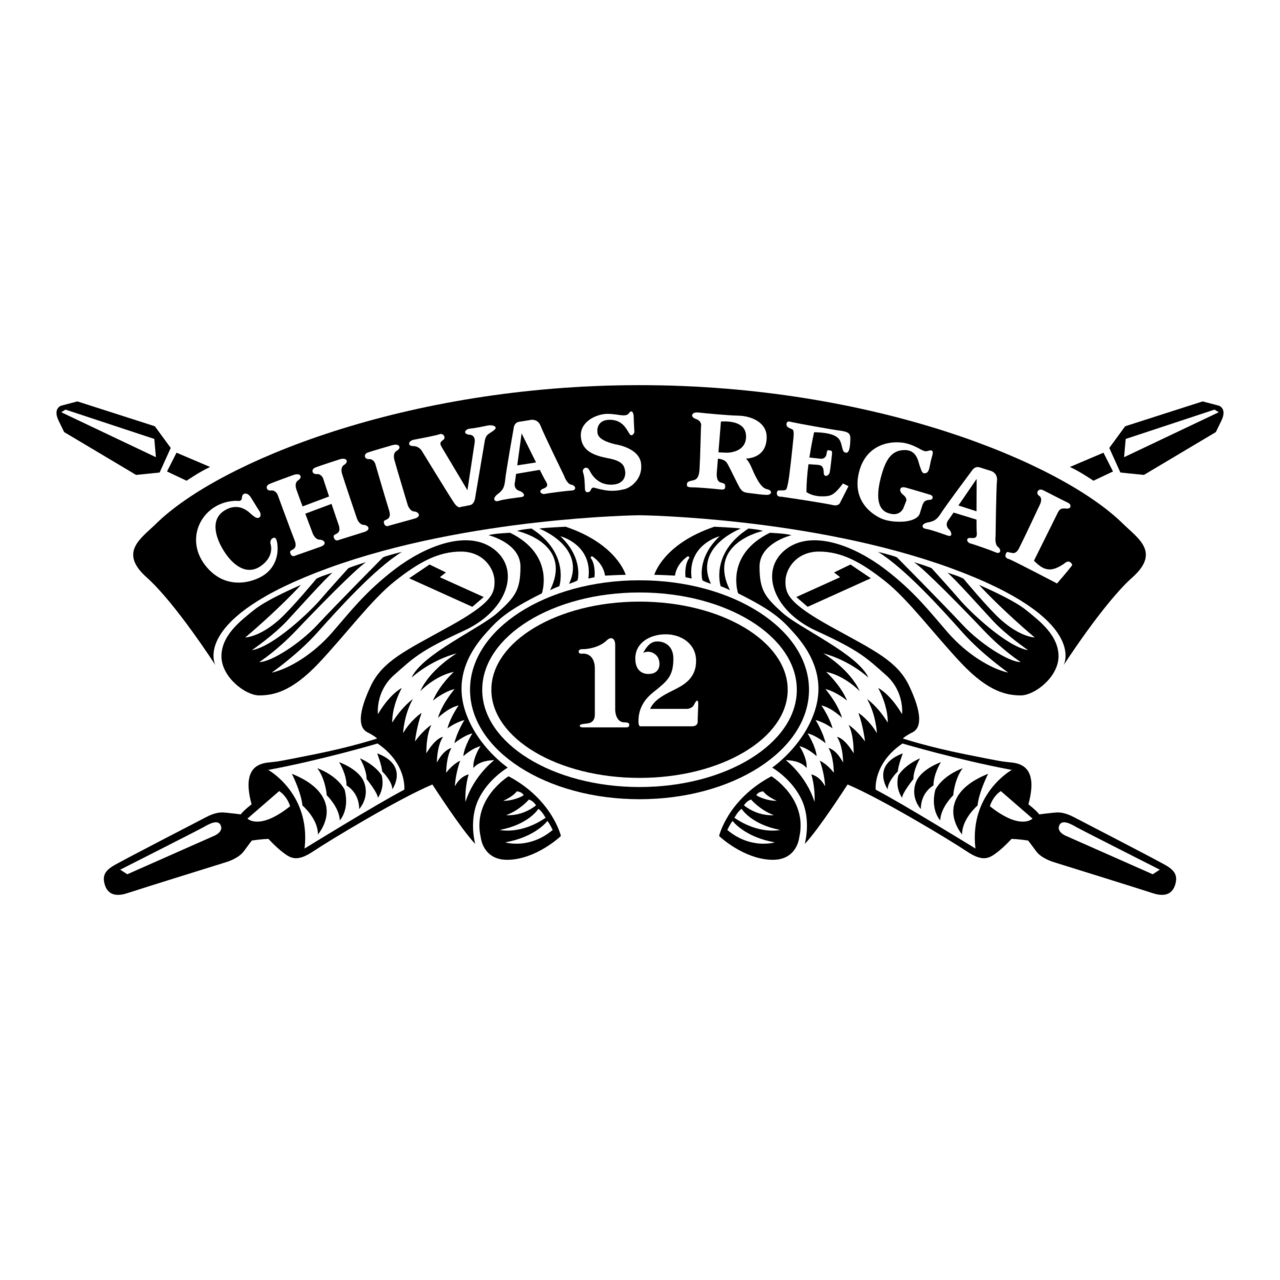 Chivas Logo PNG Image Transparent Background